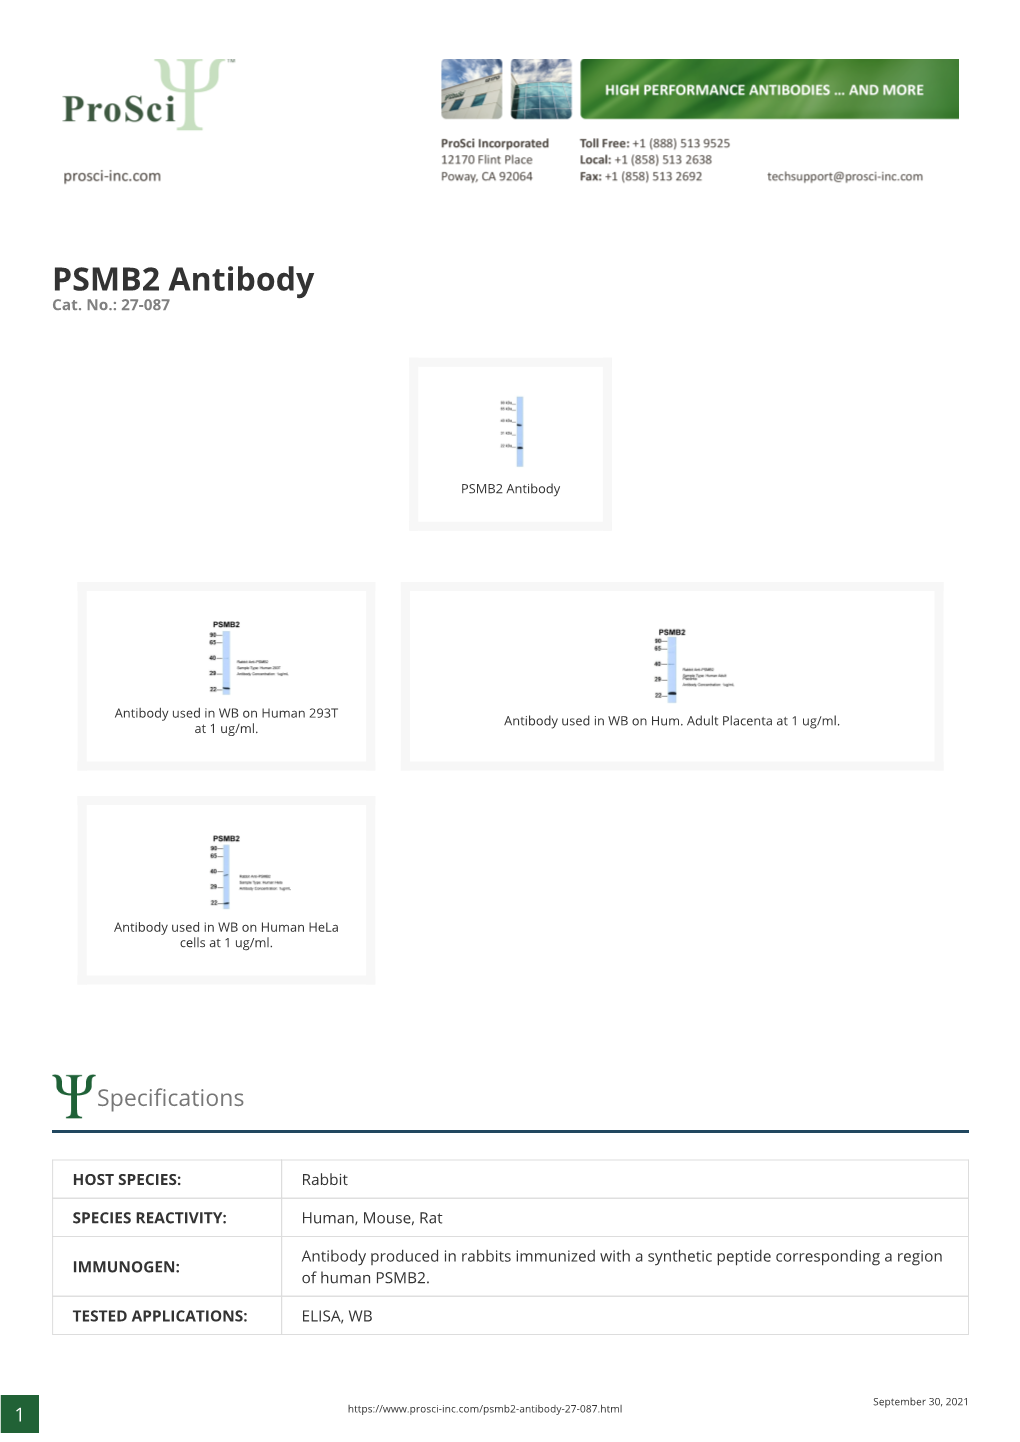 PSMB2 Antibody Cat